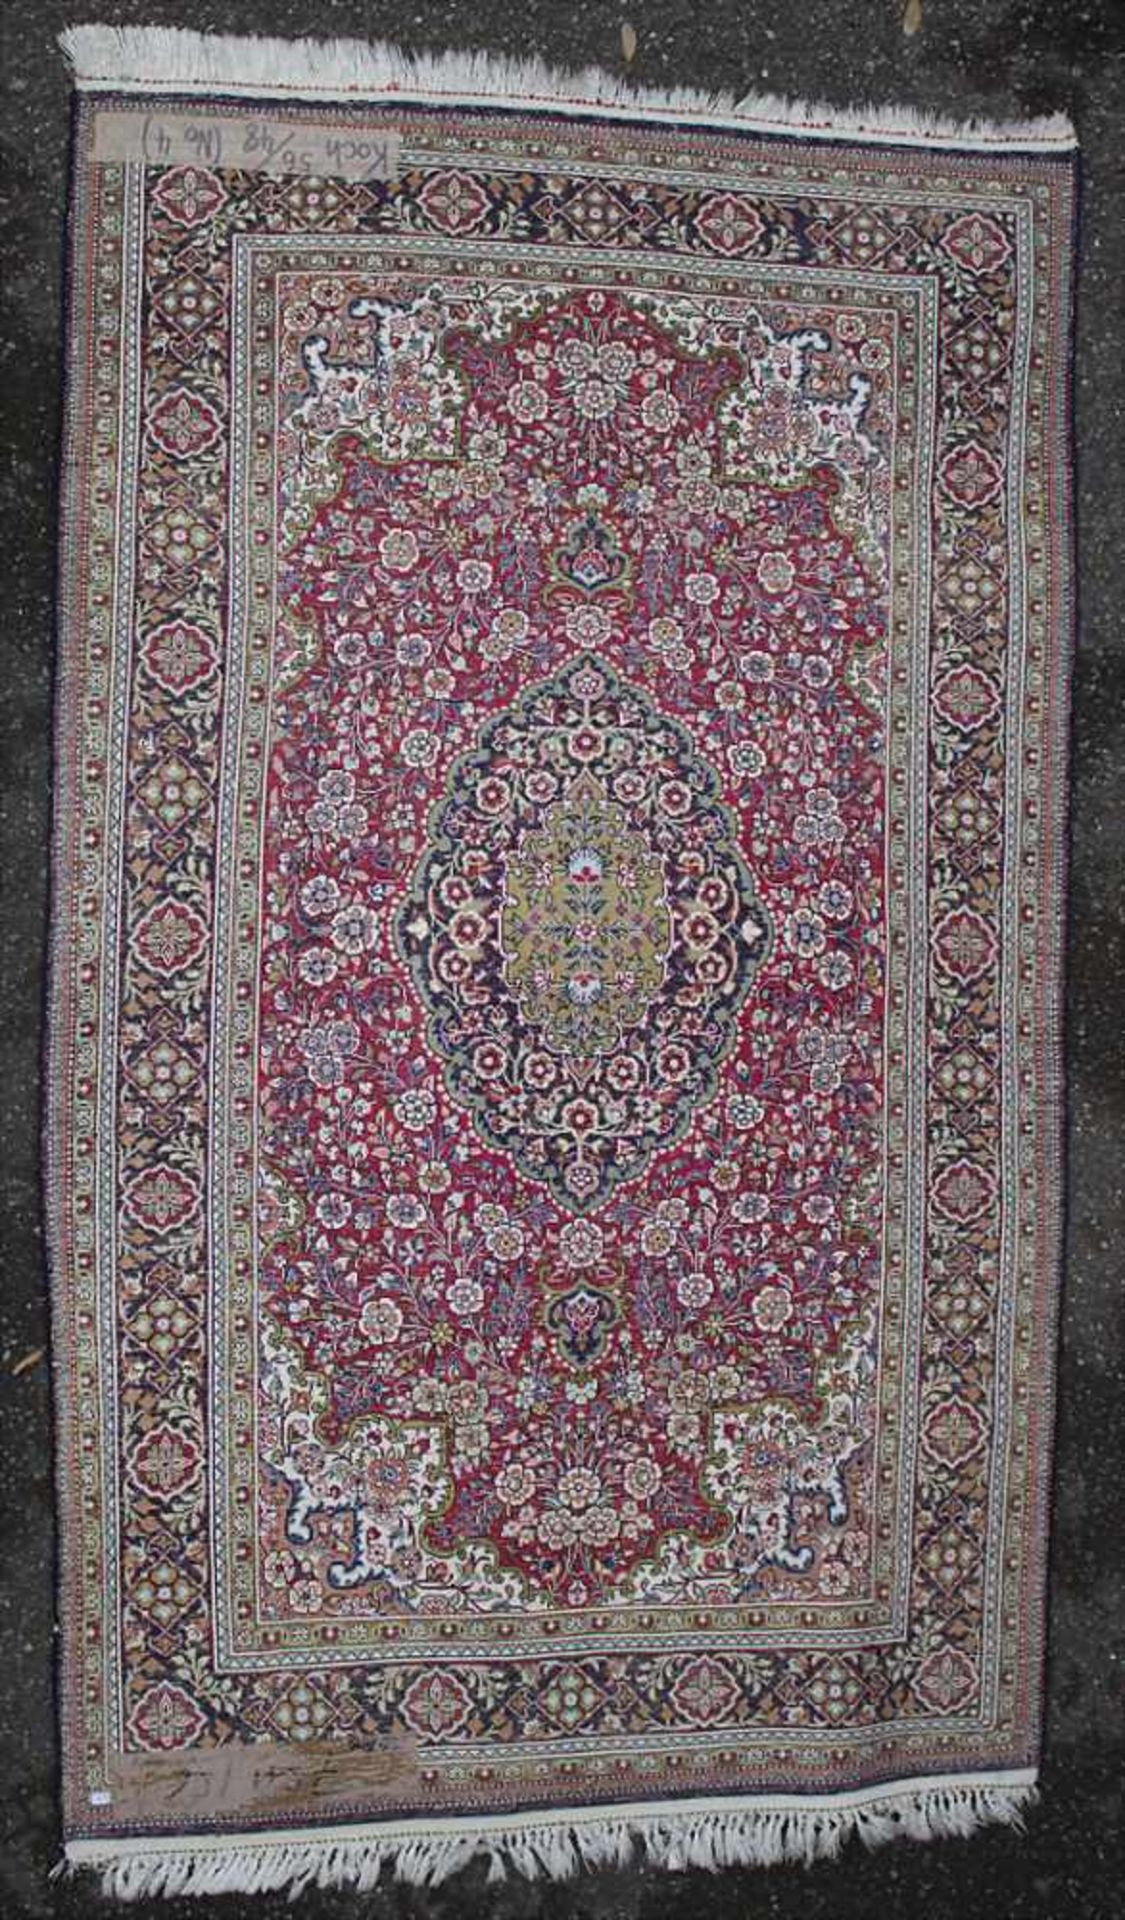 Seidenteppich / A silk carpetMaterial: Seide auf Seide, feine Knüpfung,Maße: 142 x 80 cm, Zustand: - Image 3 of 5